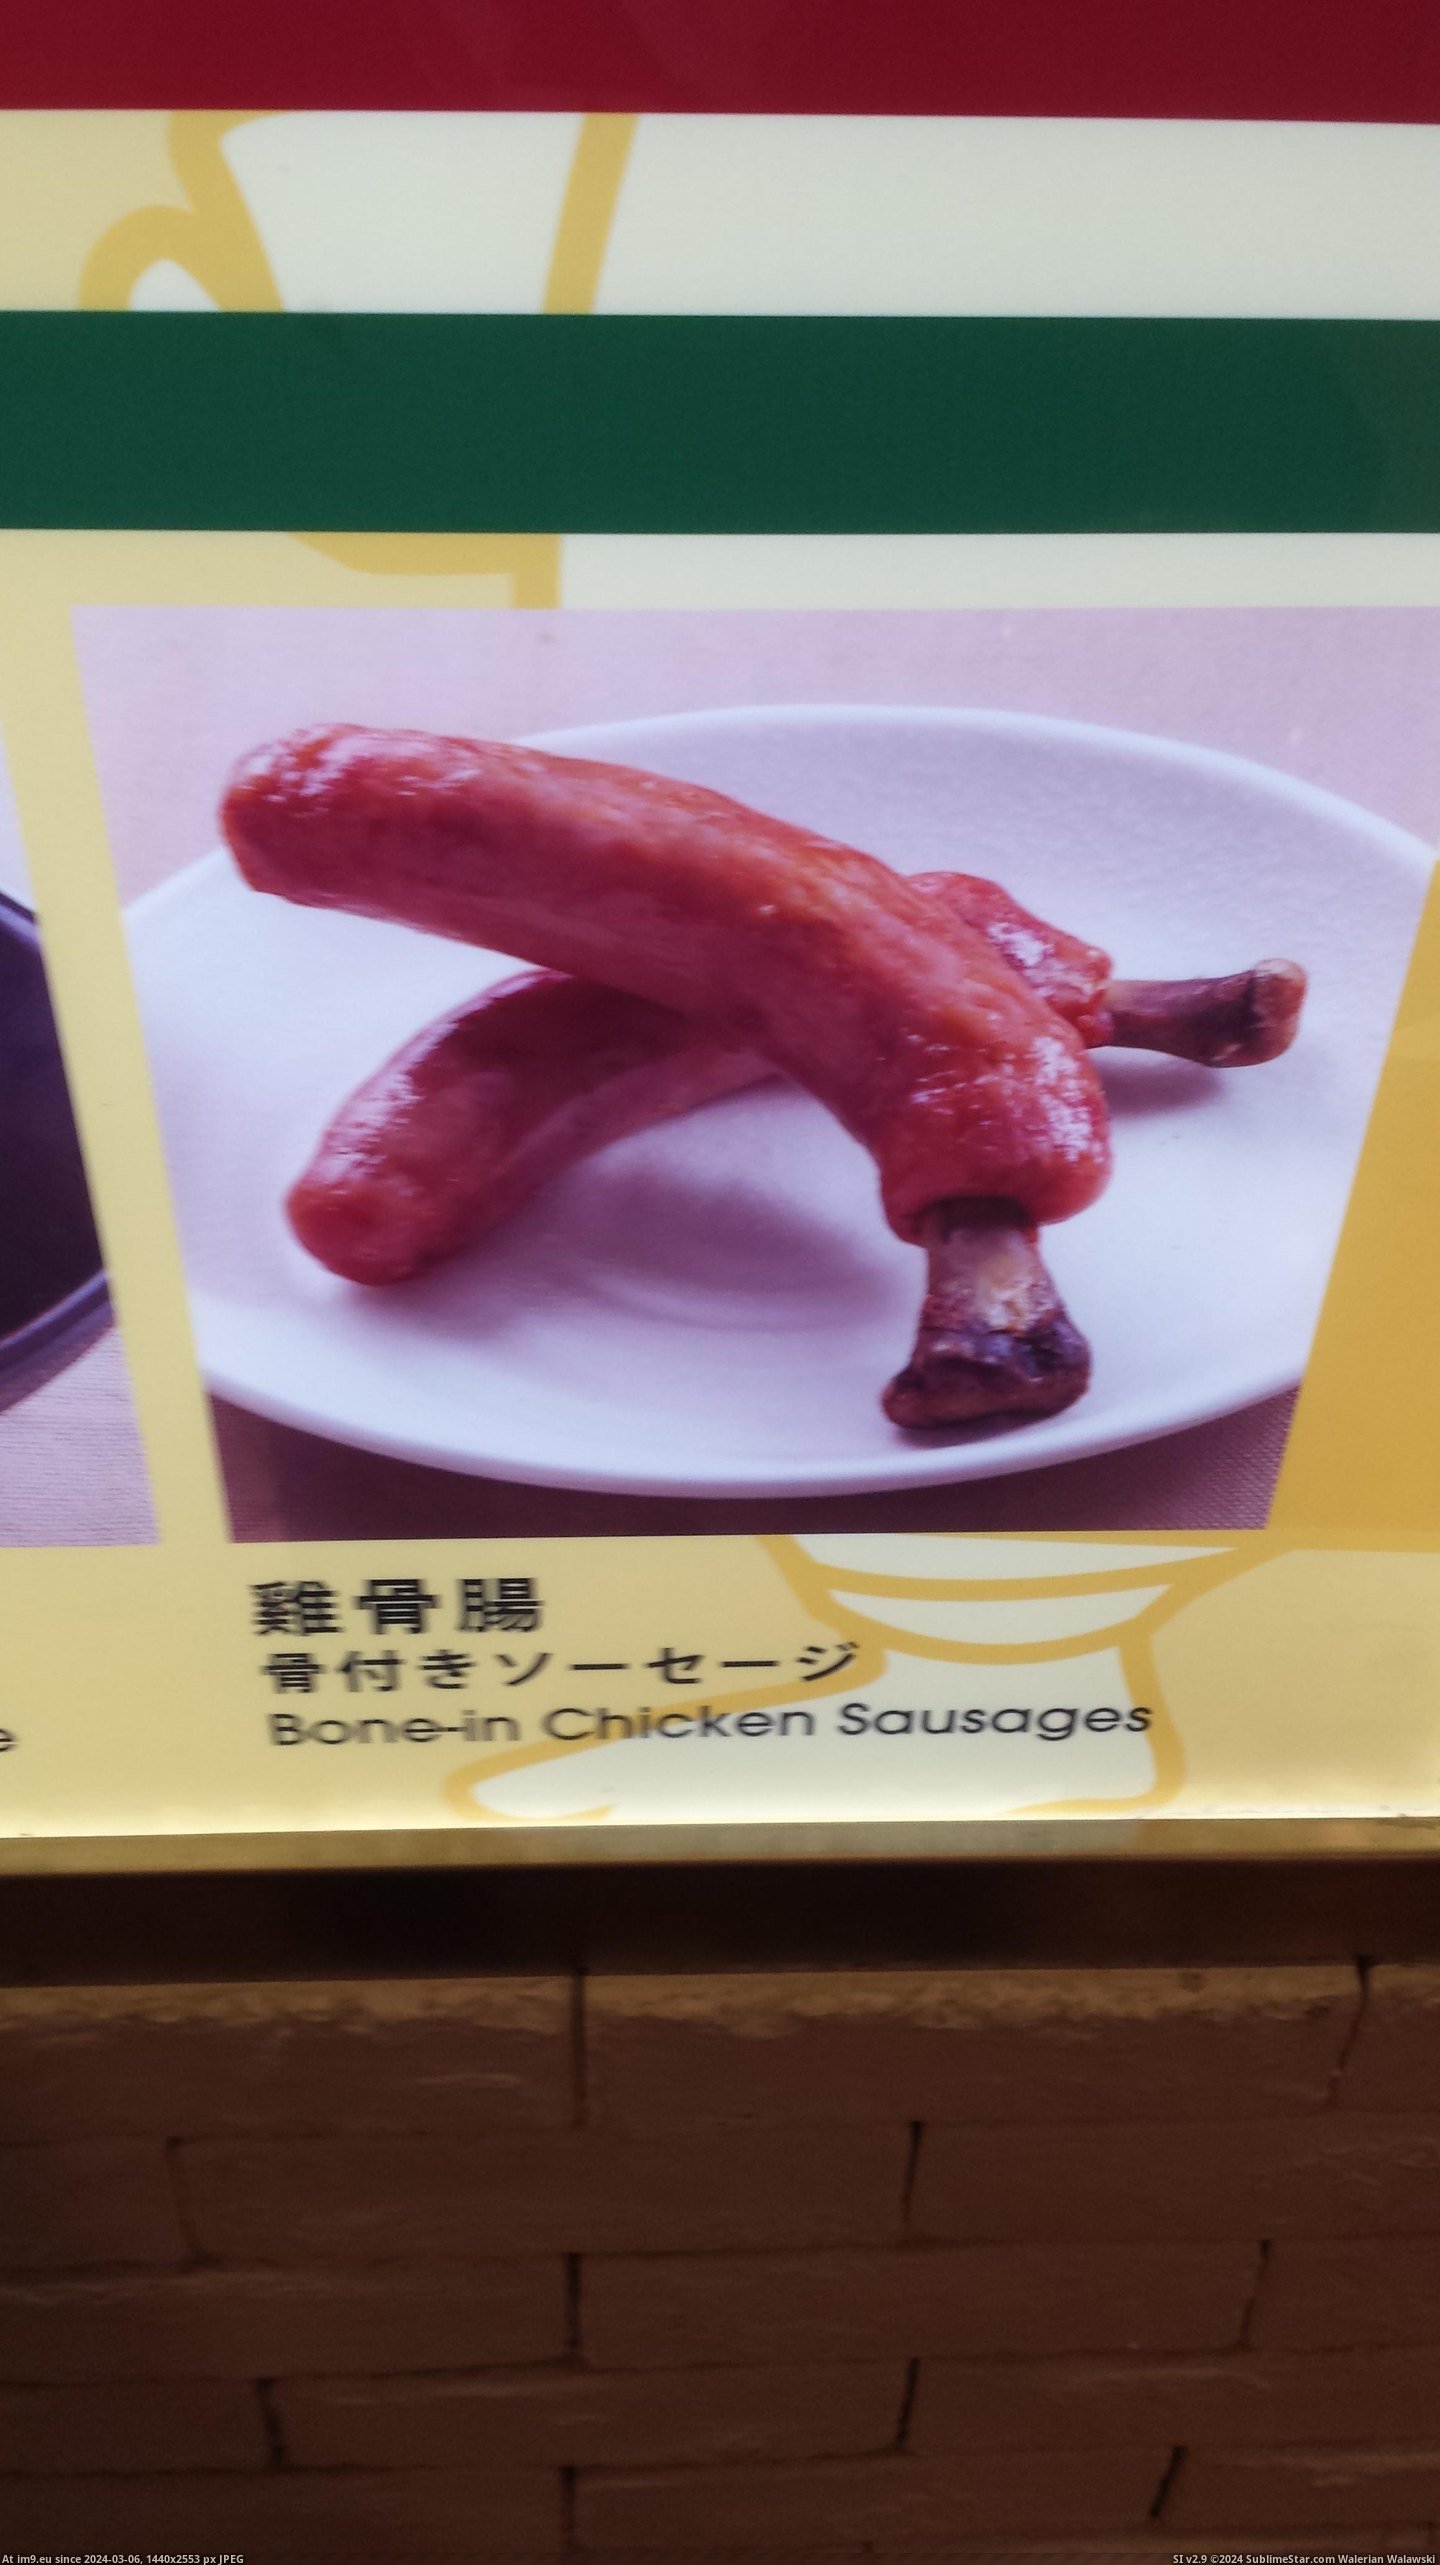 #Wtf #Bone #Sausages #Chicken [Wtf] 'Bone-in' chicken sausages Pic. (Obraz z album My r/WTF favs))